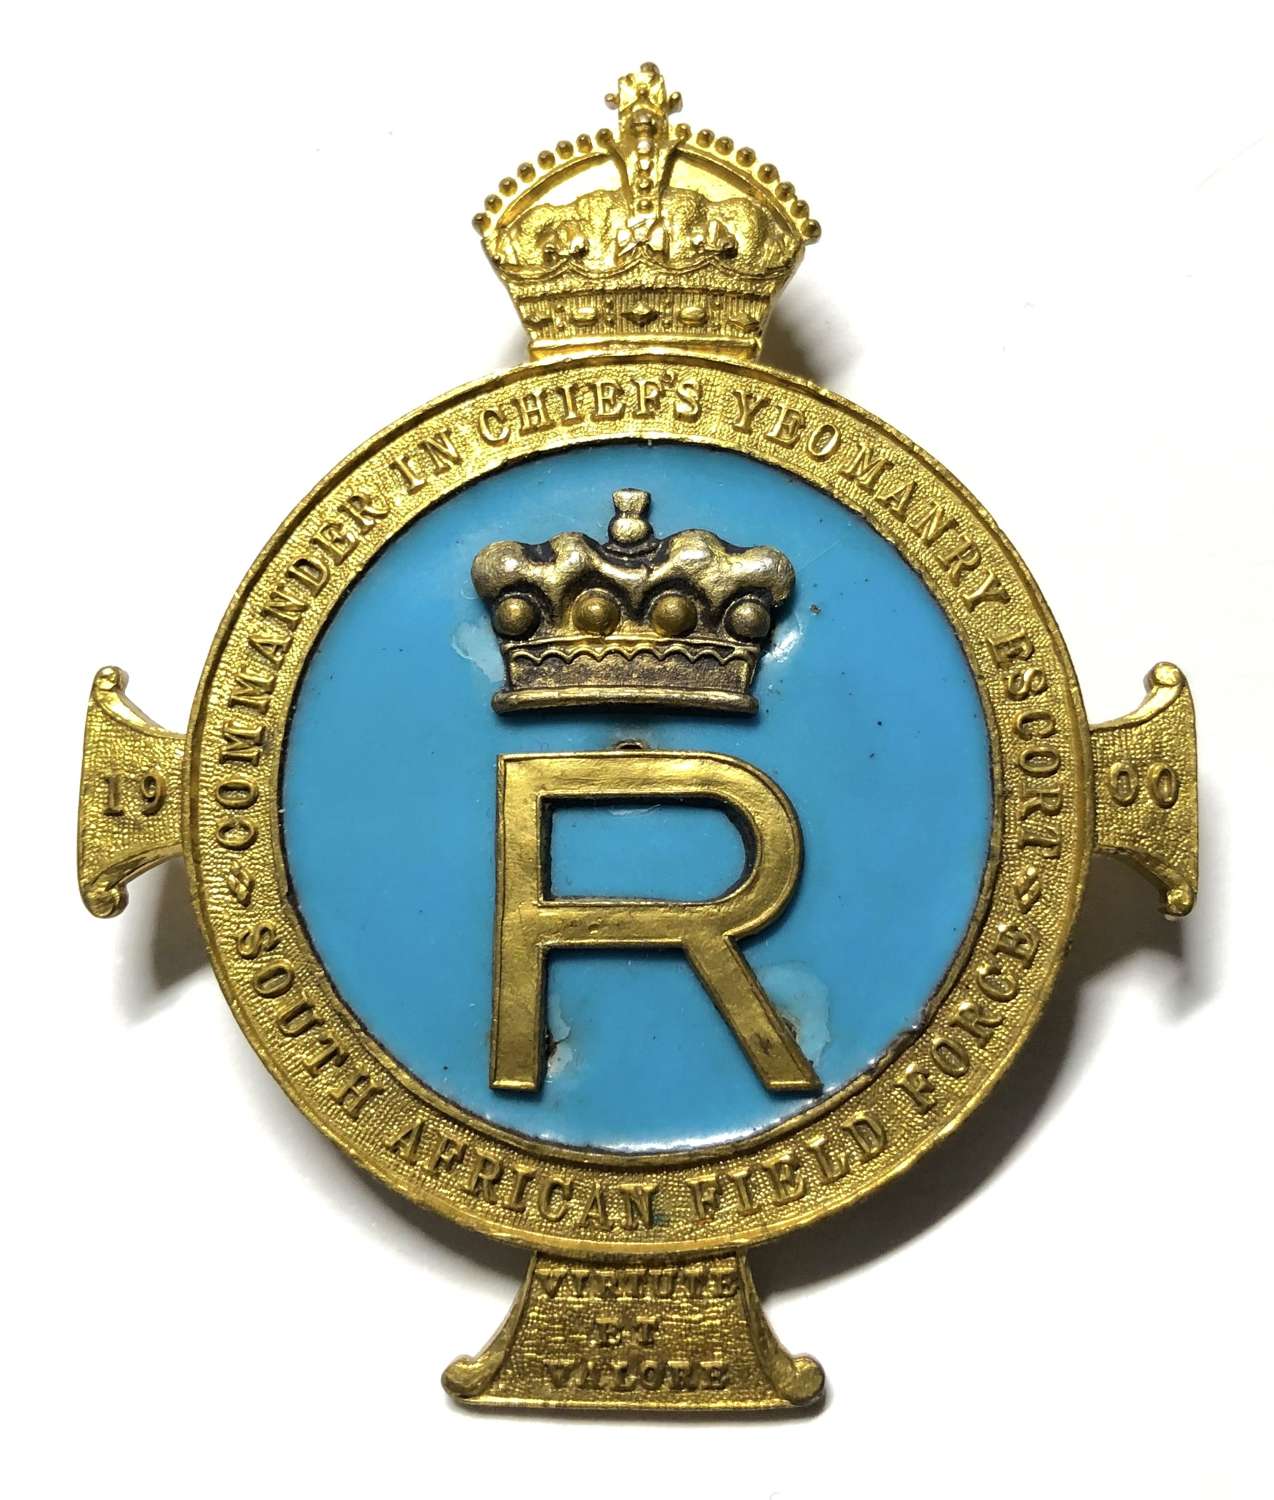 Commander in Chief’s Yeomanry Escort Boer War badge